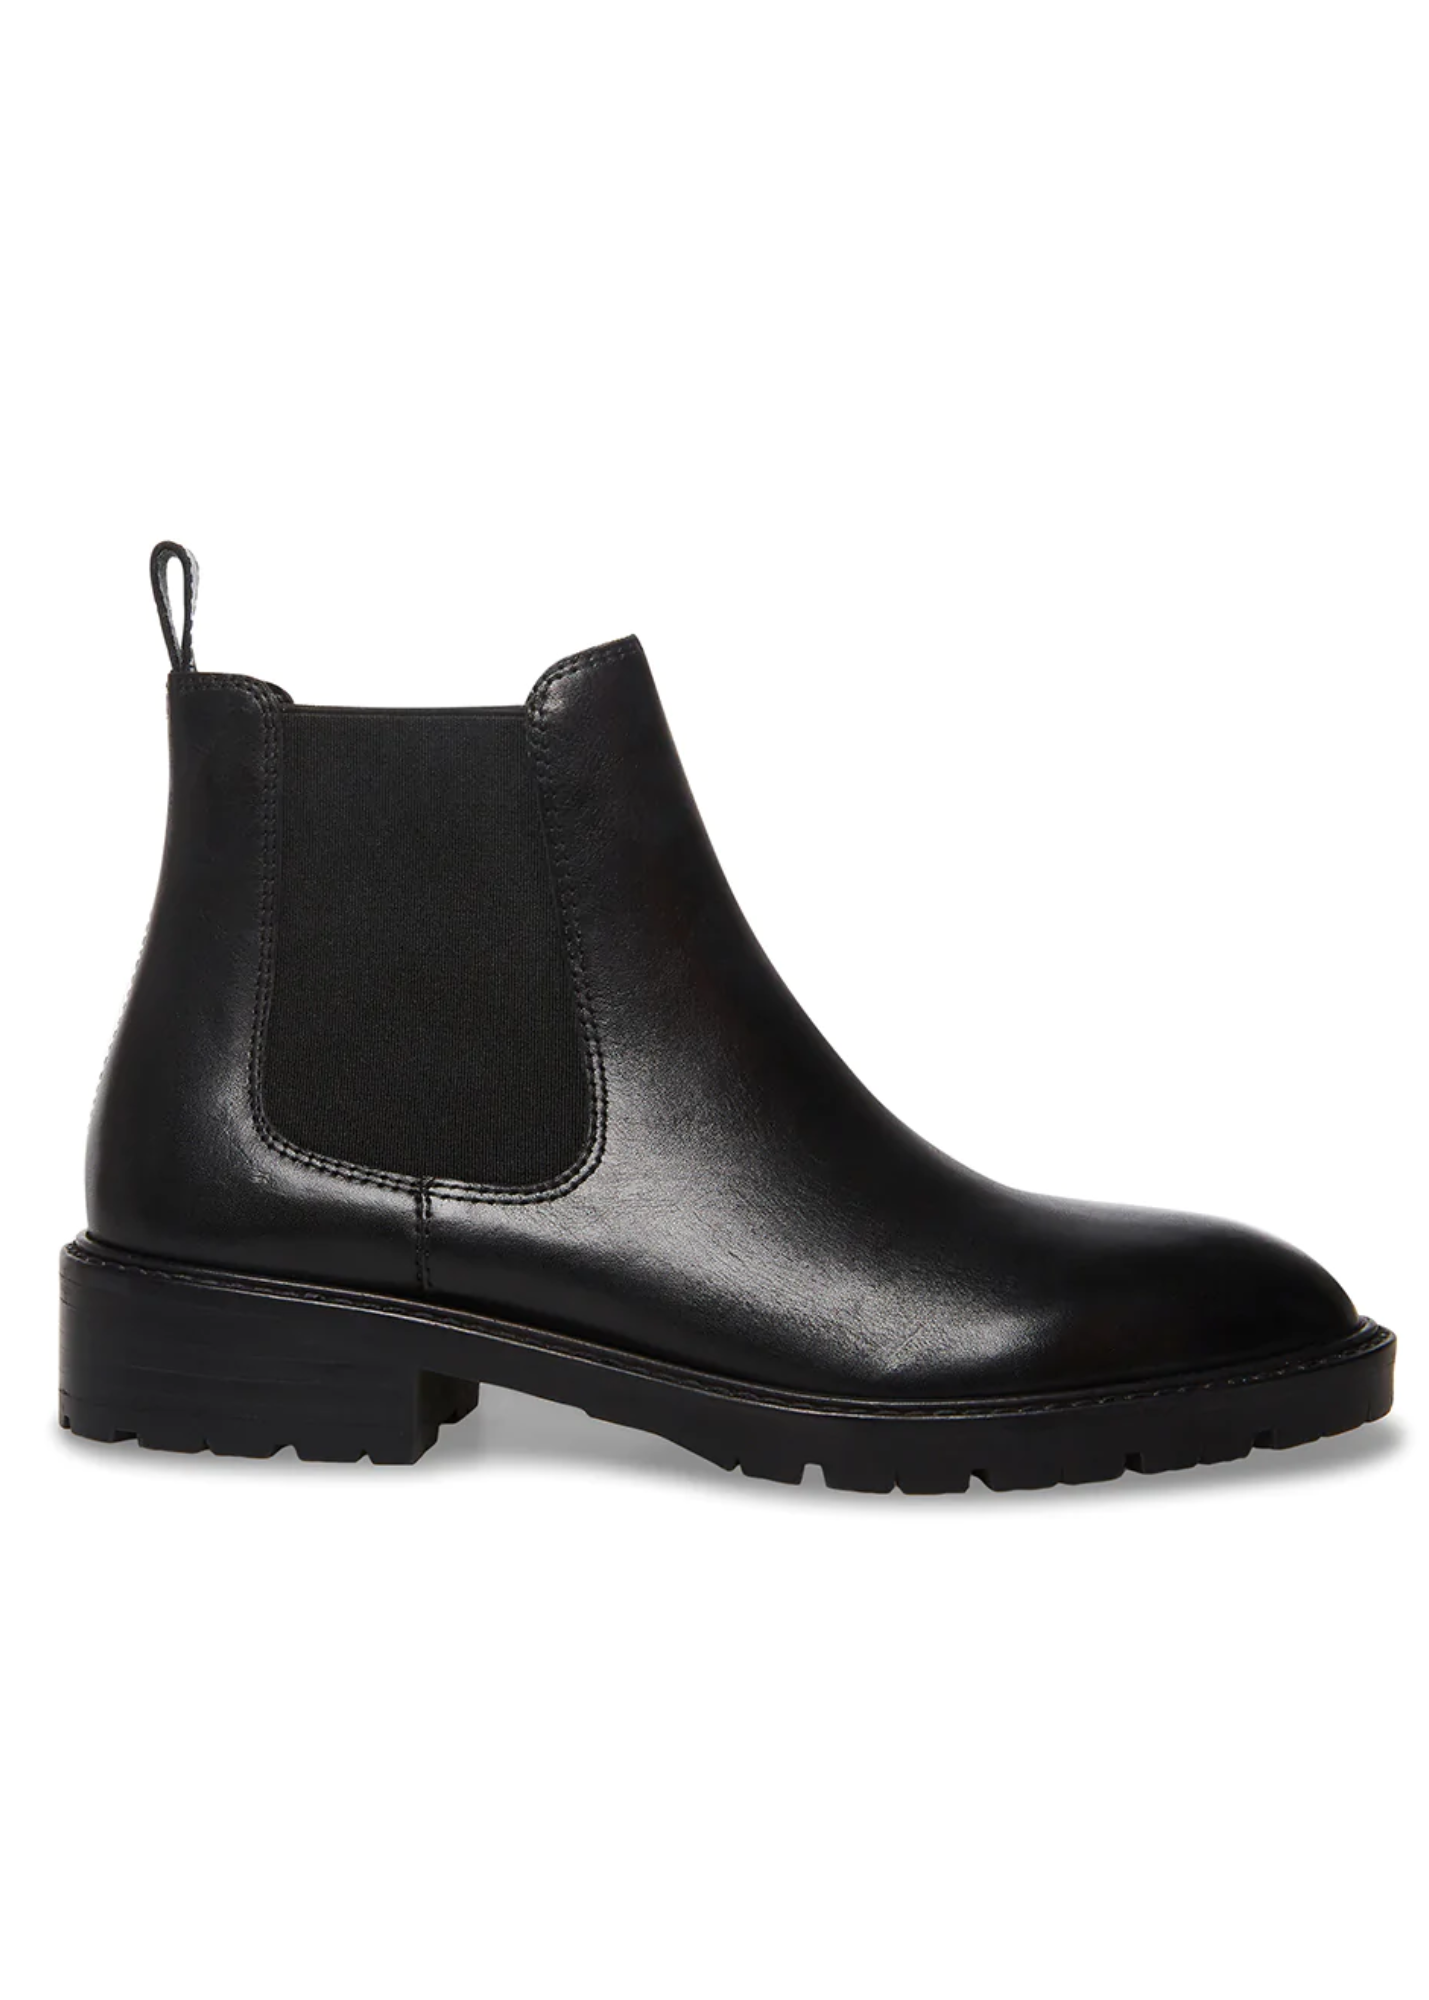 Steve Madden Leopold Boot Shoes Black / 6